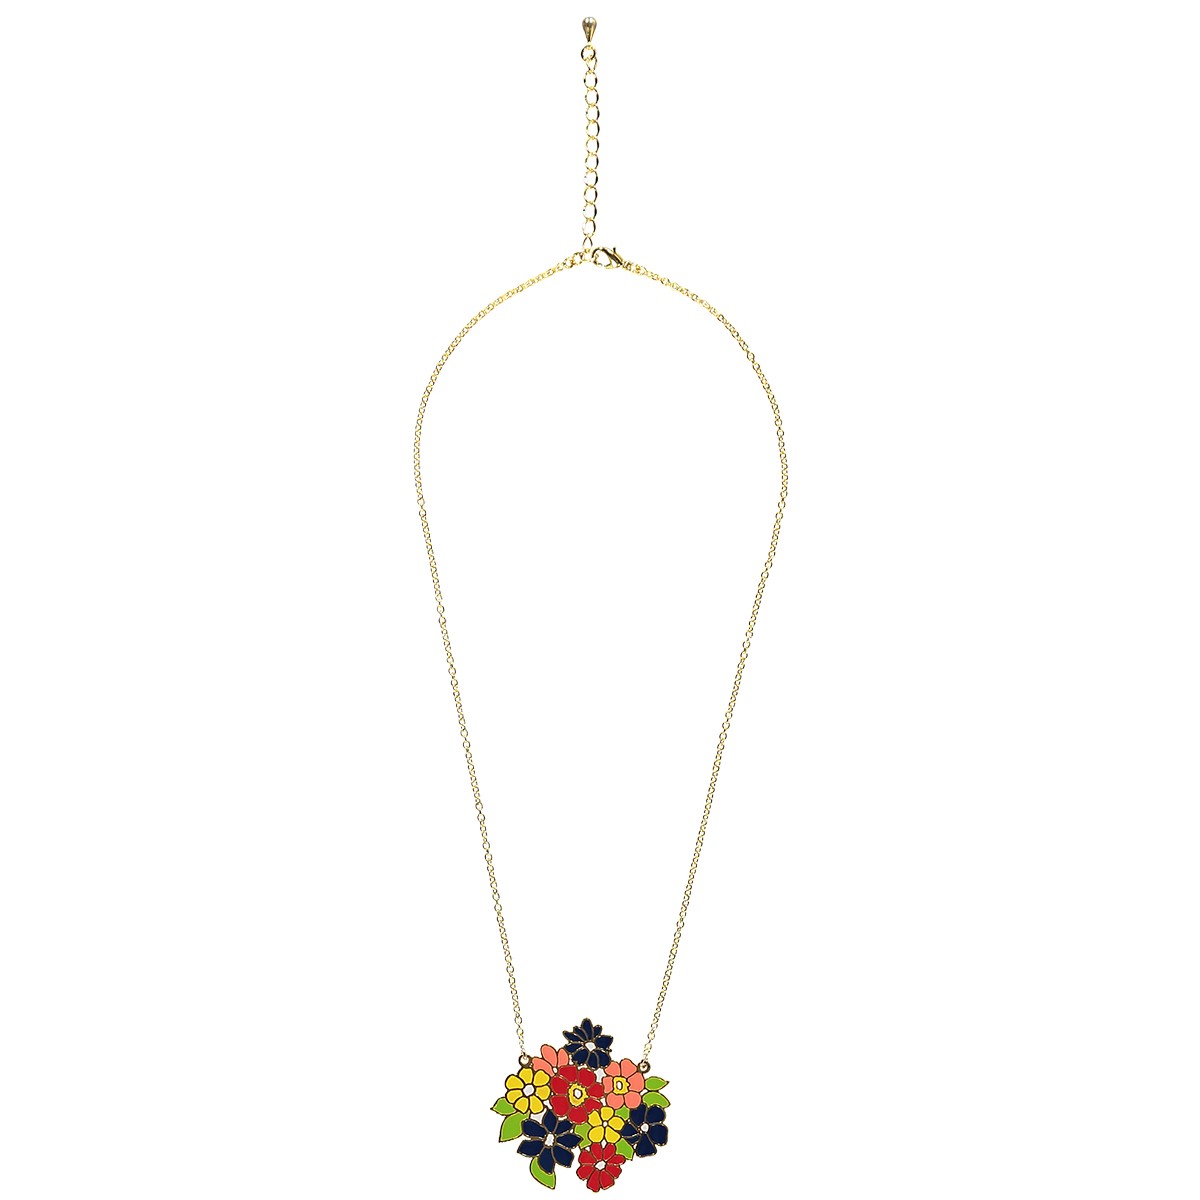 Jean flowers necklace